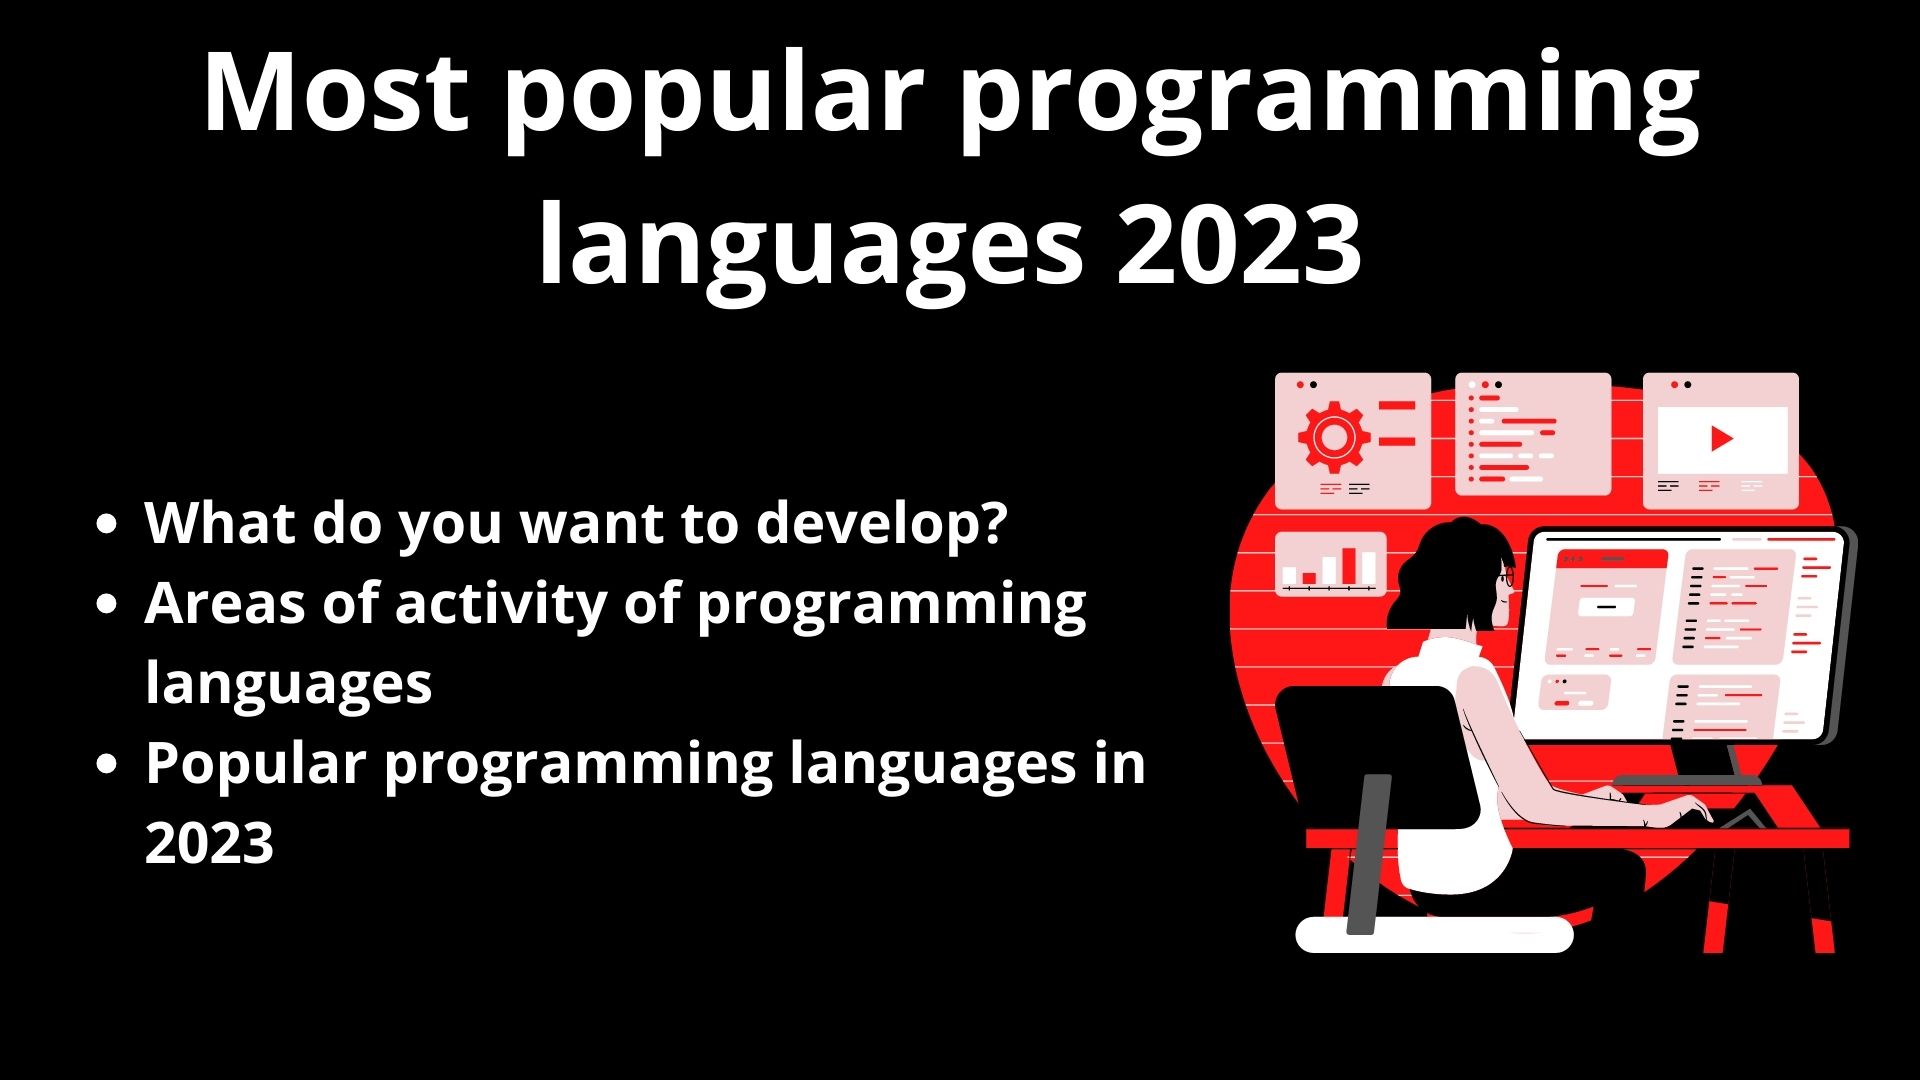 Most popular programming languages 2023